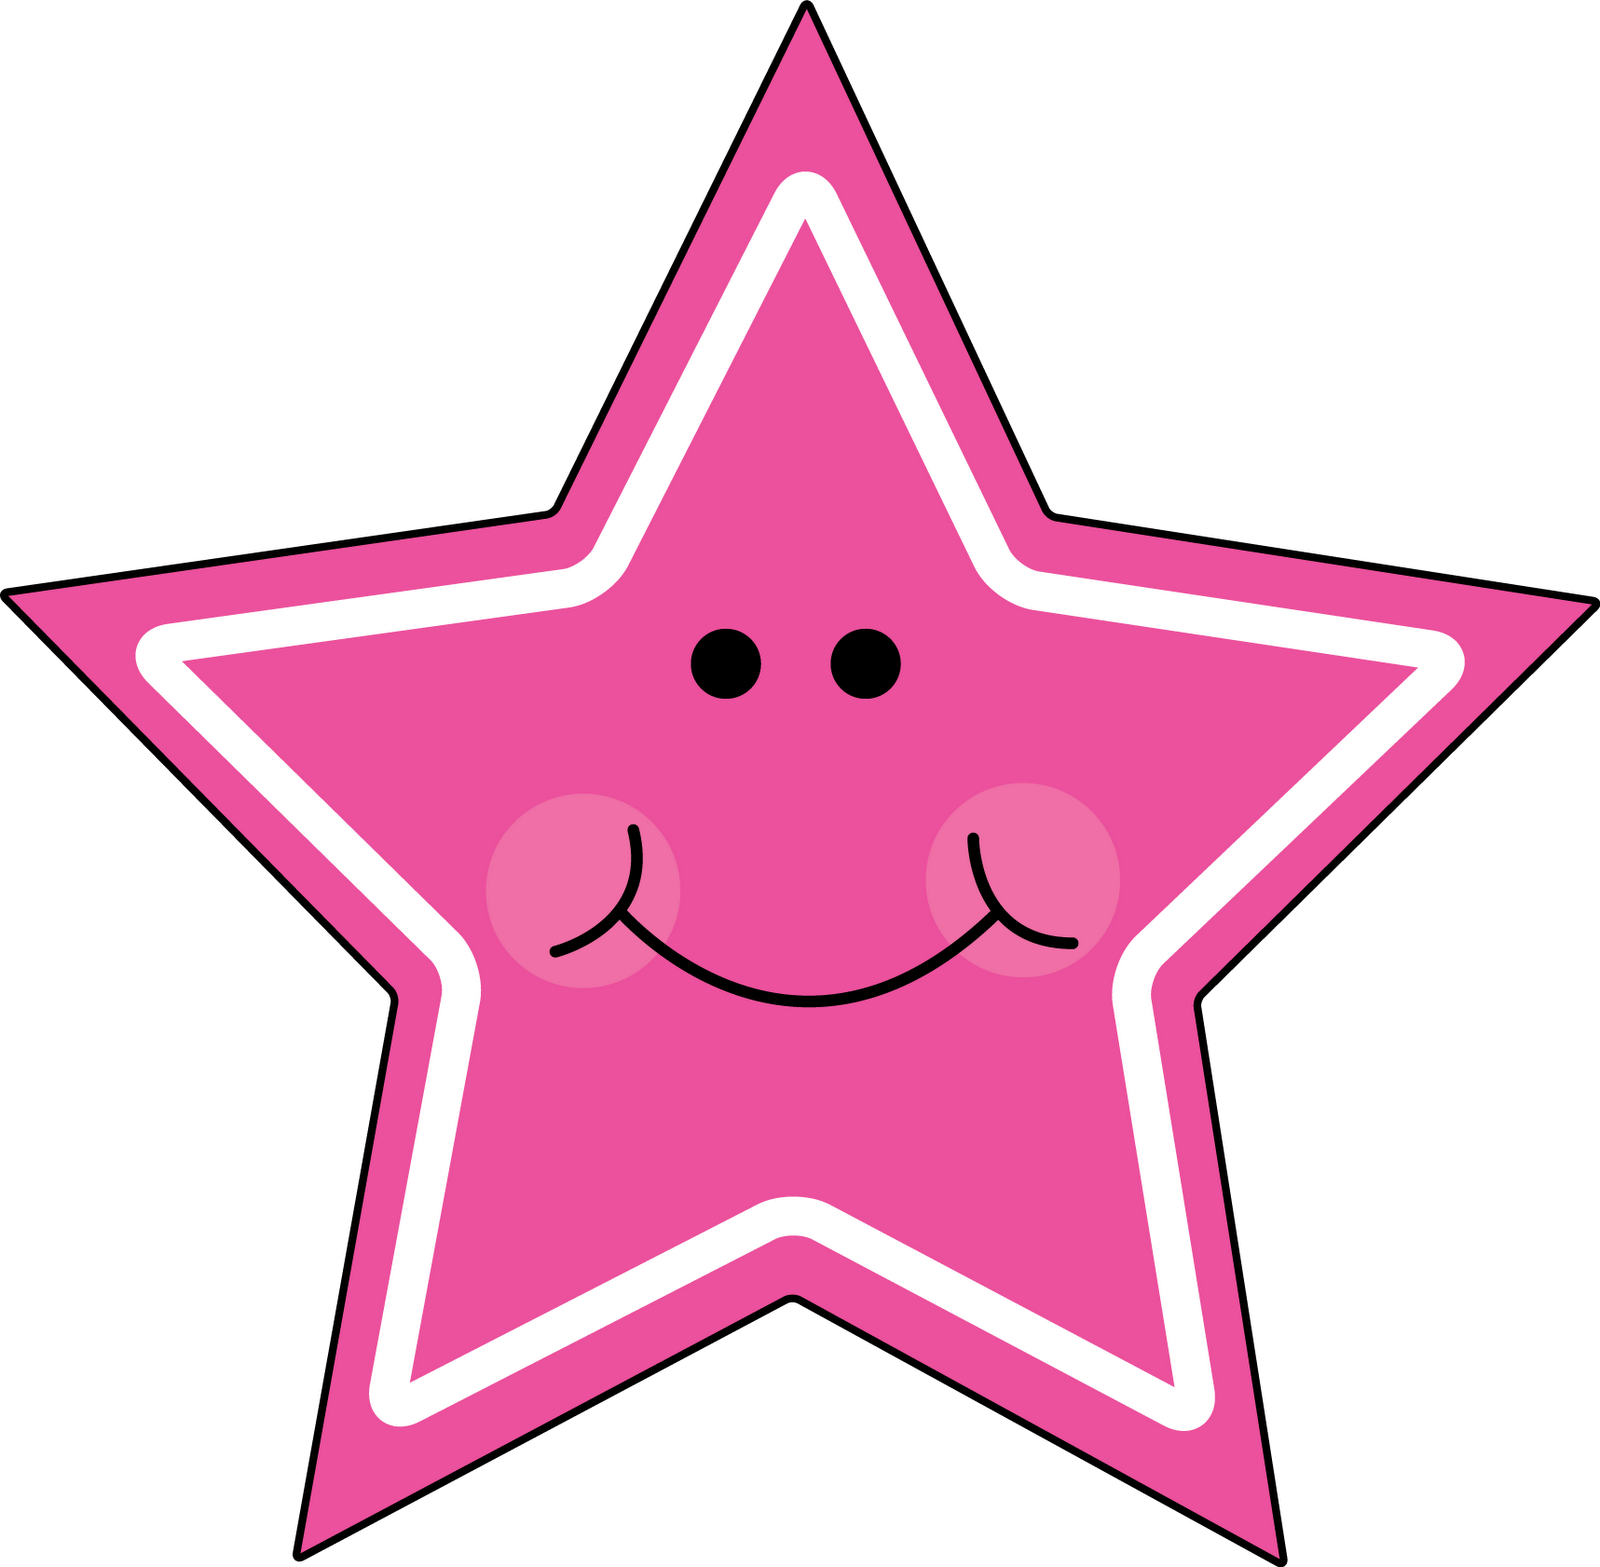 Star Clipart For Kids - ClipArt Best